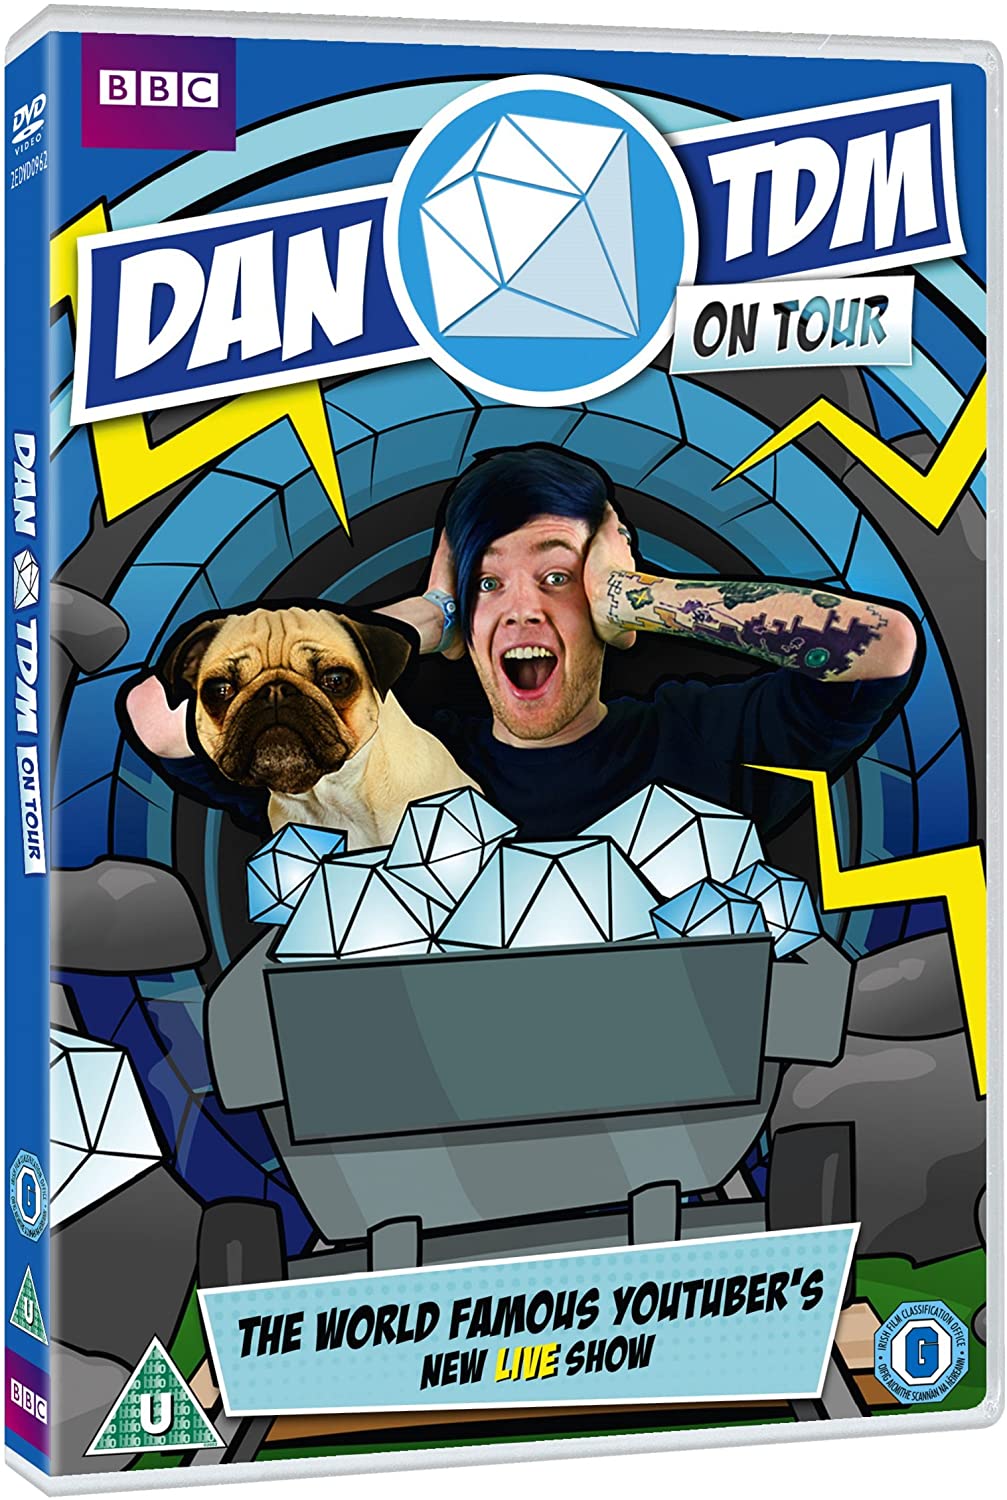 Dan TDM en tournée [DVD] [2017]